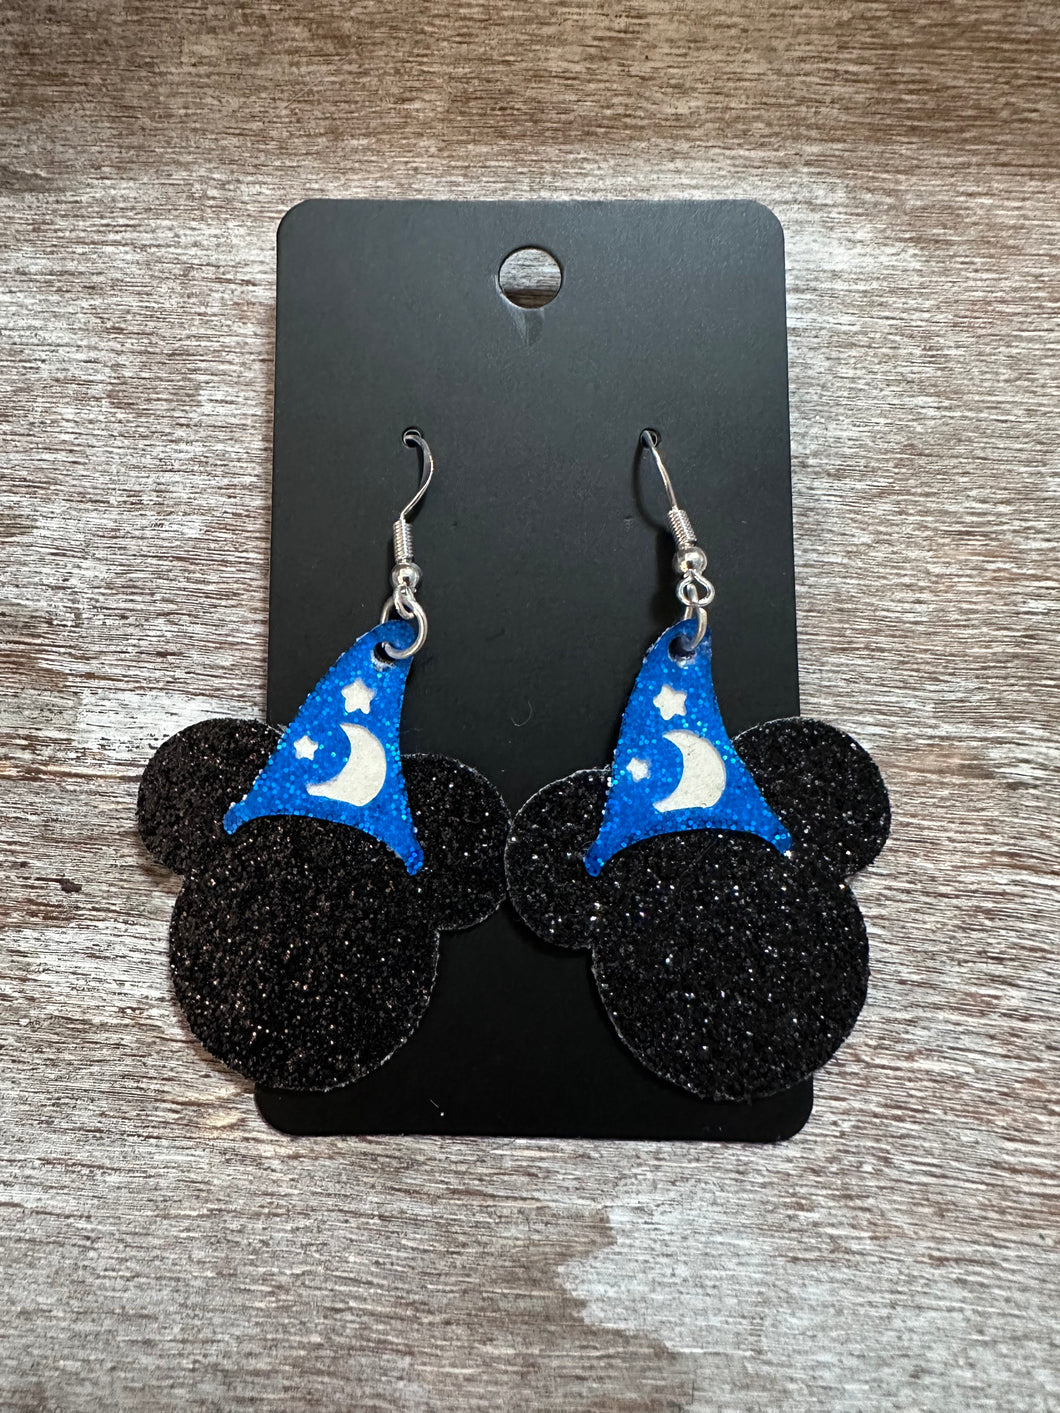 Magical Mickey Earrings